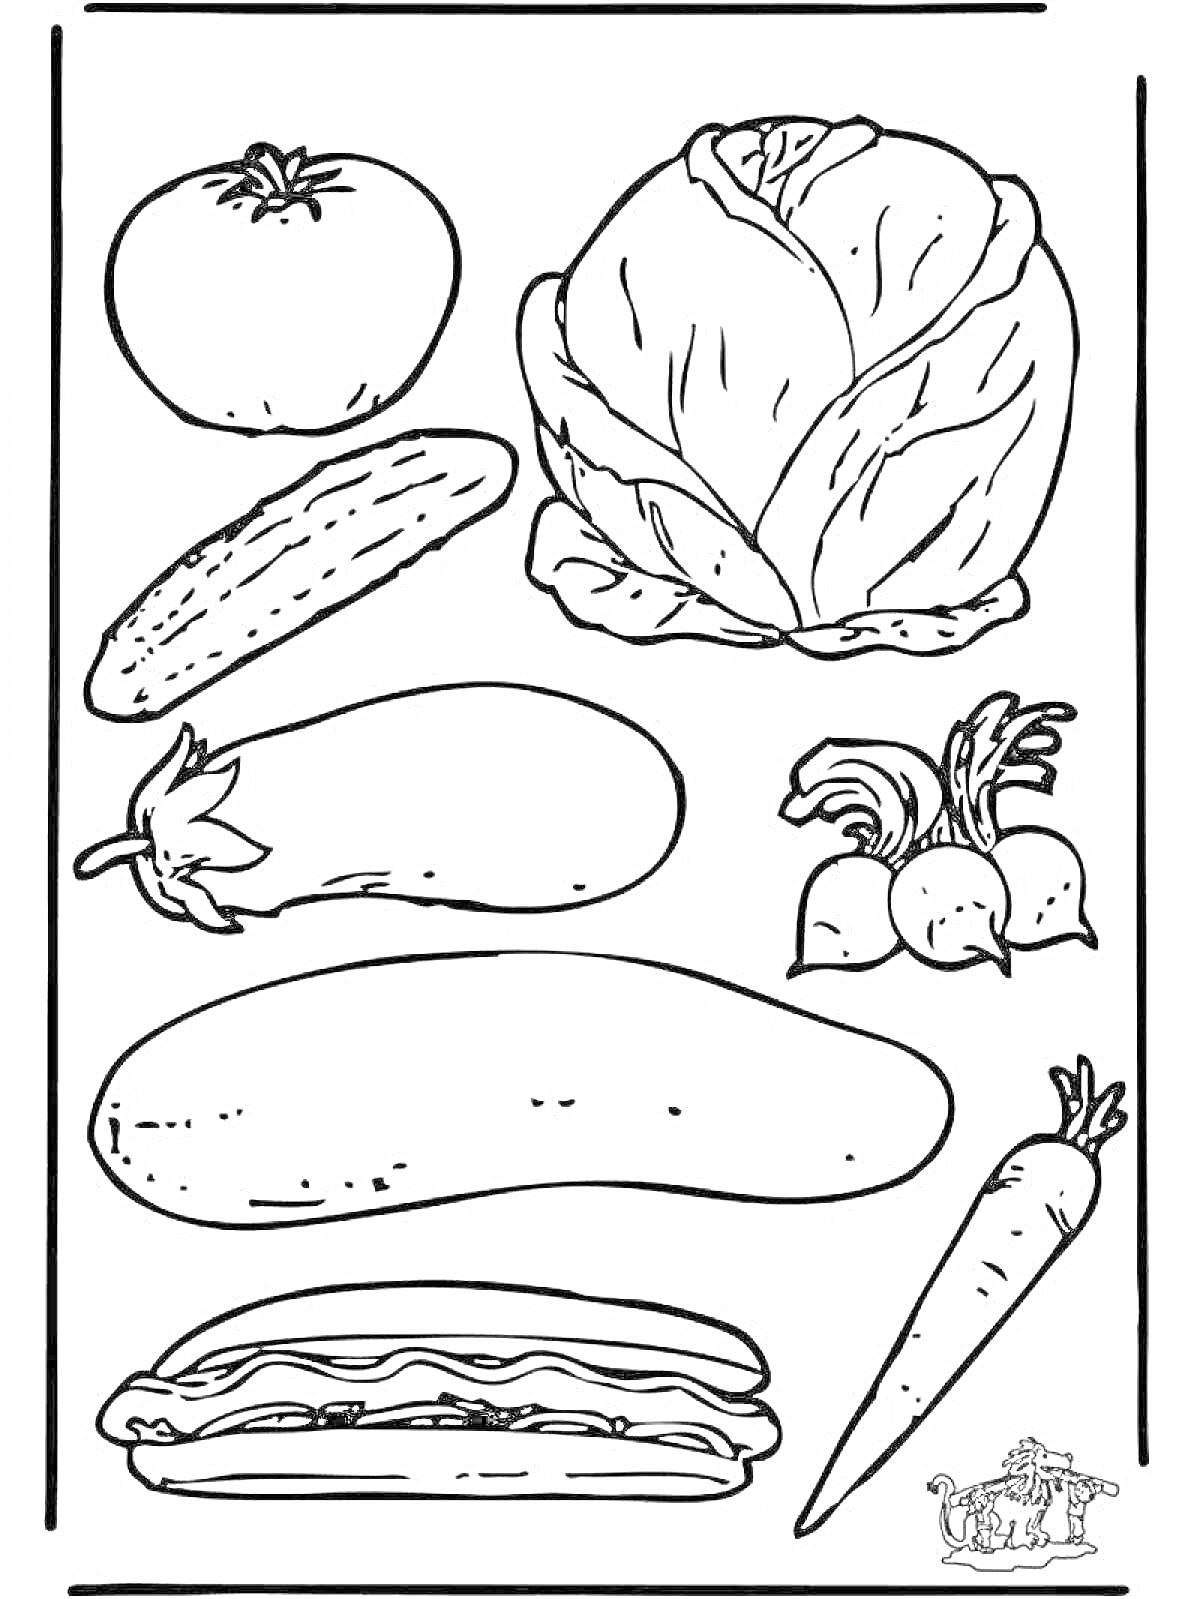 На раскраске изображено: Овощи, Помидор, Капуста, Огурец, Баклажан, Кабачок